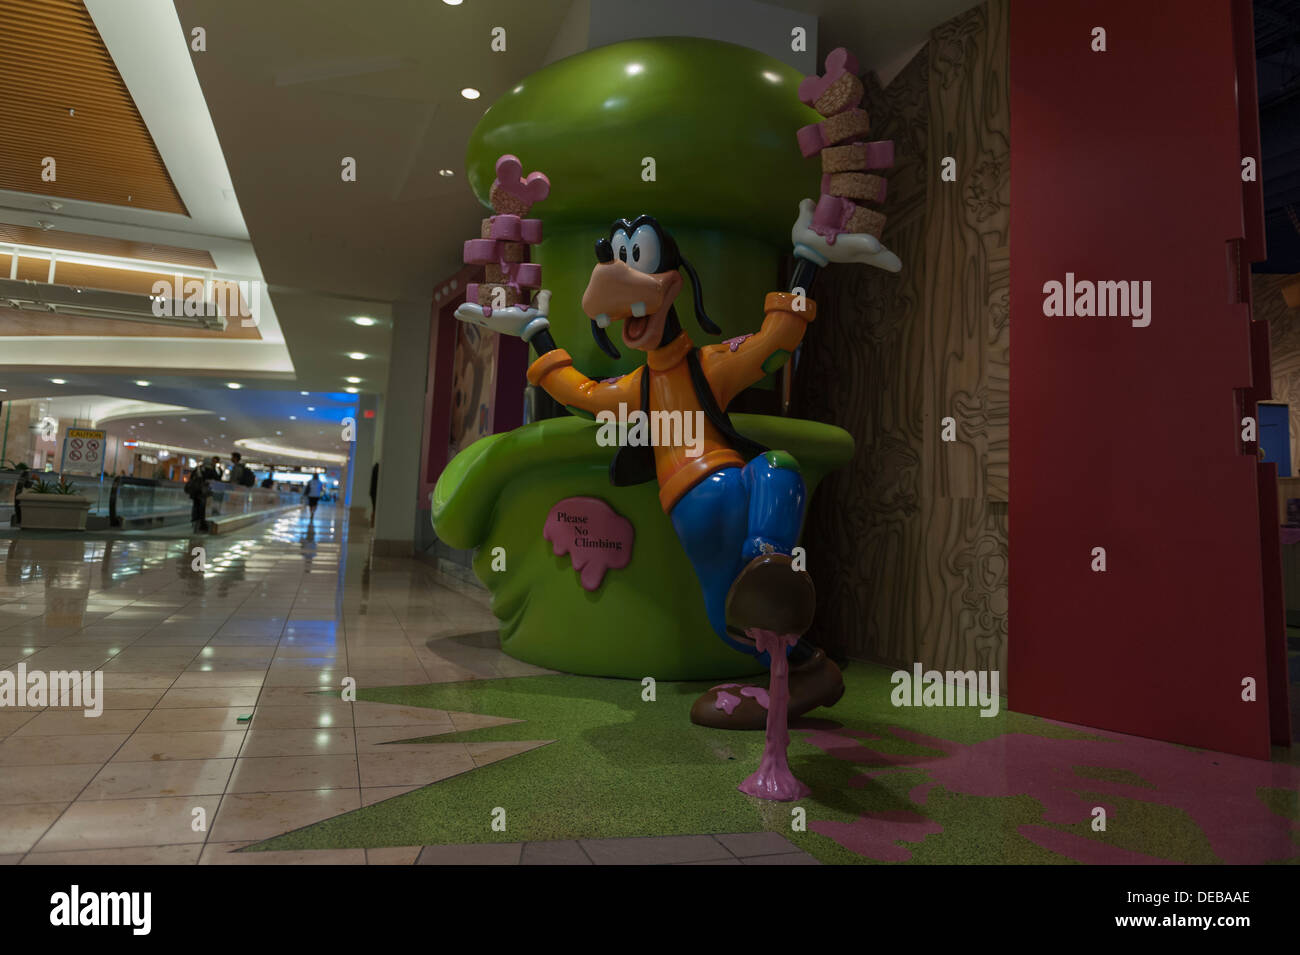 Disney Character Goofy located within the Orlando International Airport Florida USA Stock Photo